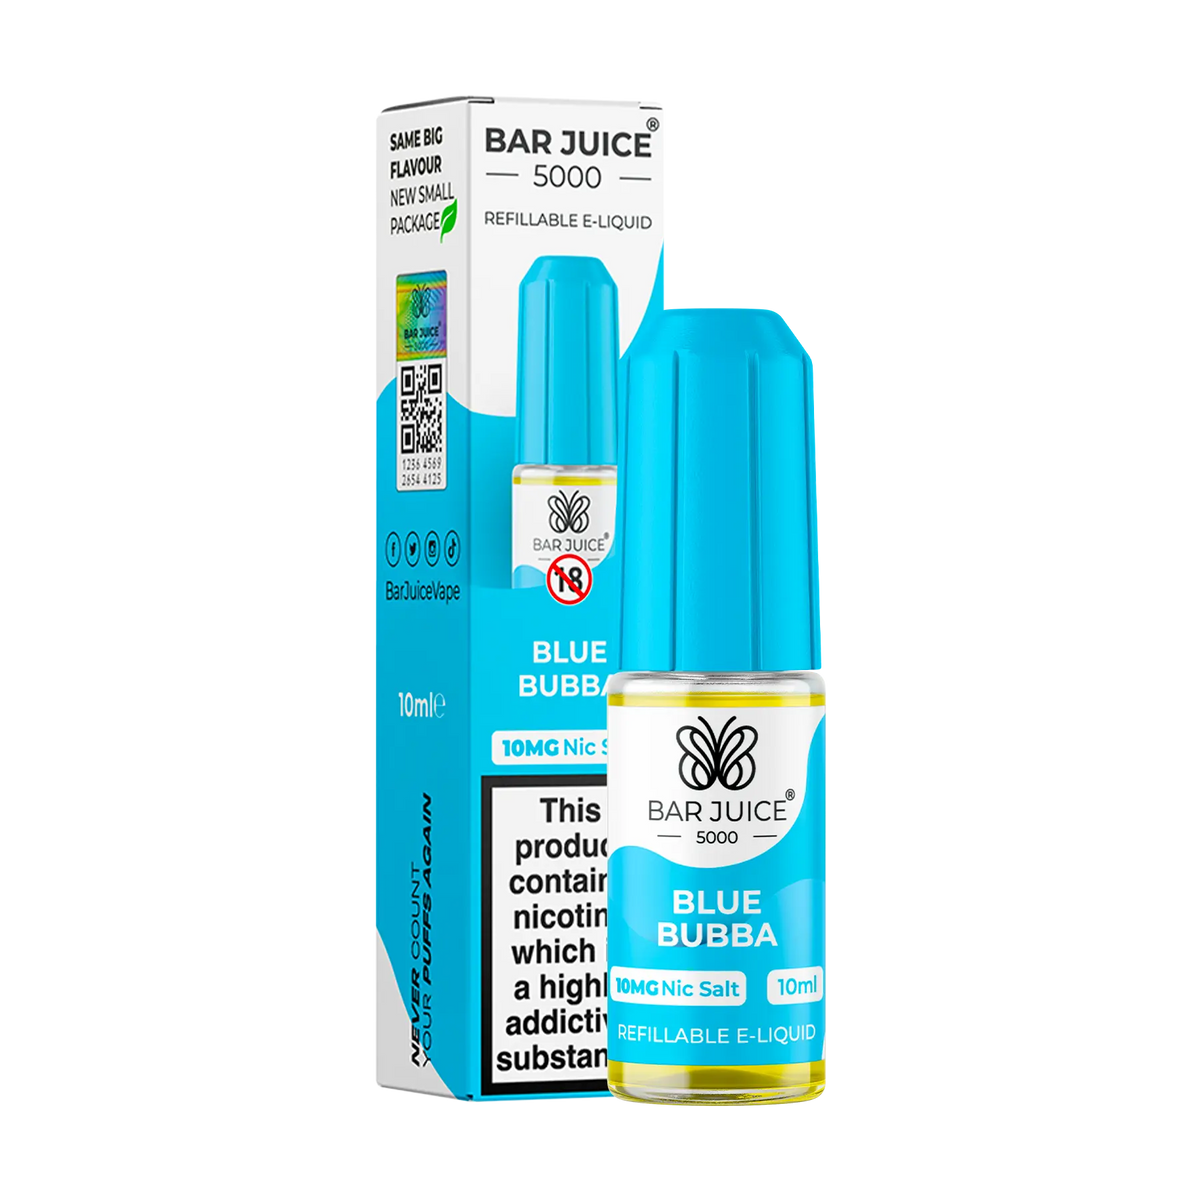 Bar Juice 5000 - Blue Bubba 10ml E Liquid Nicotine Salt